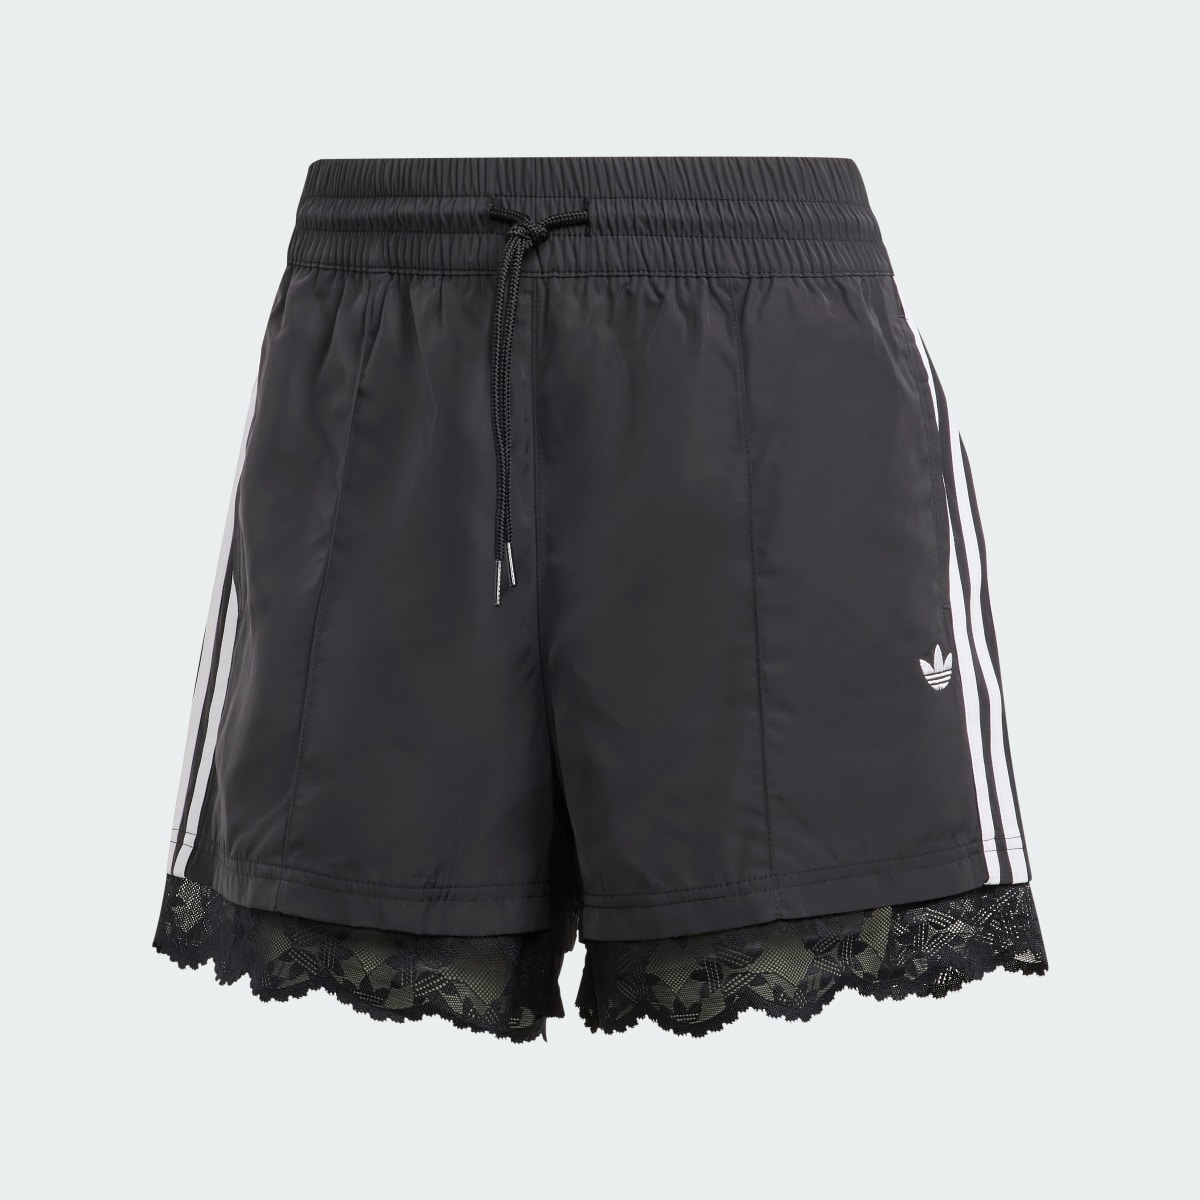 Adidas Lace Trim 3-Stripes Shorts. 4